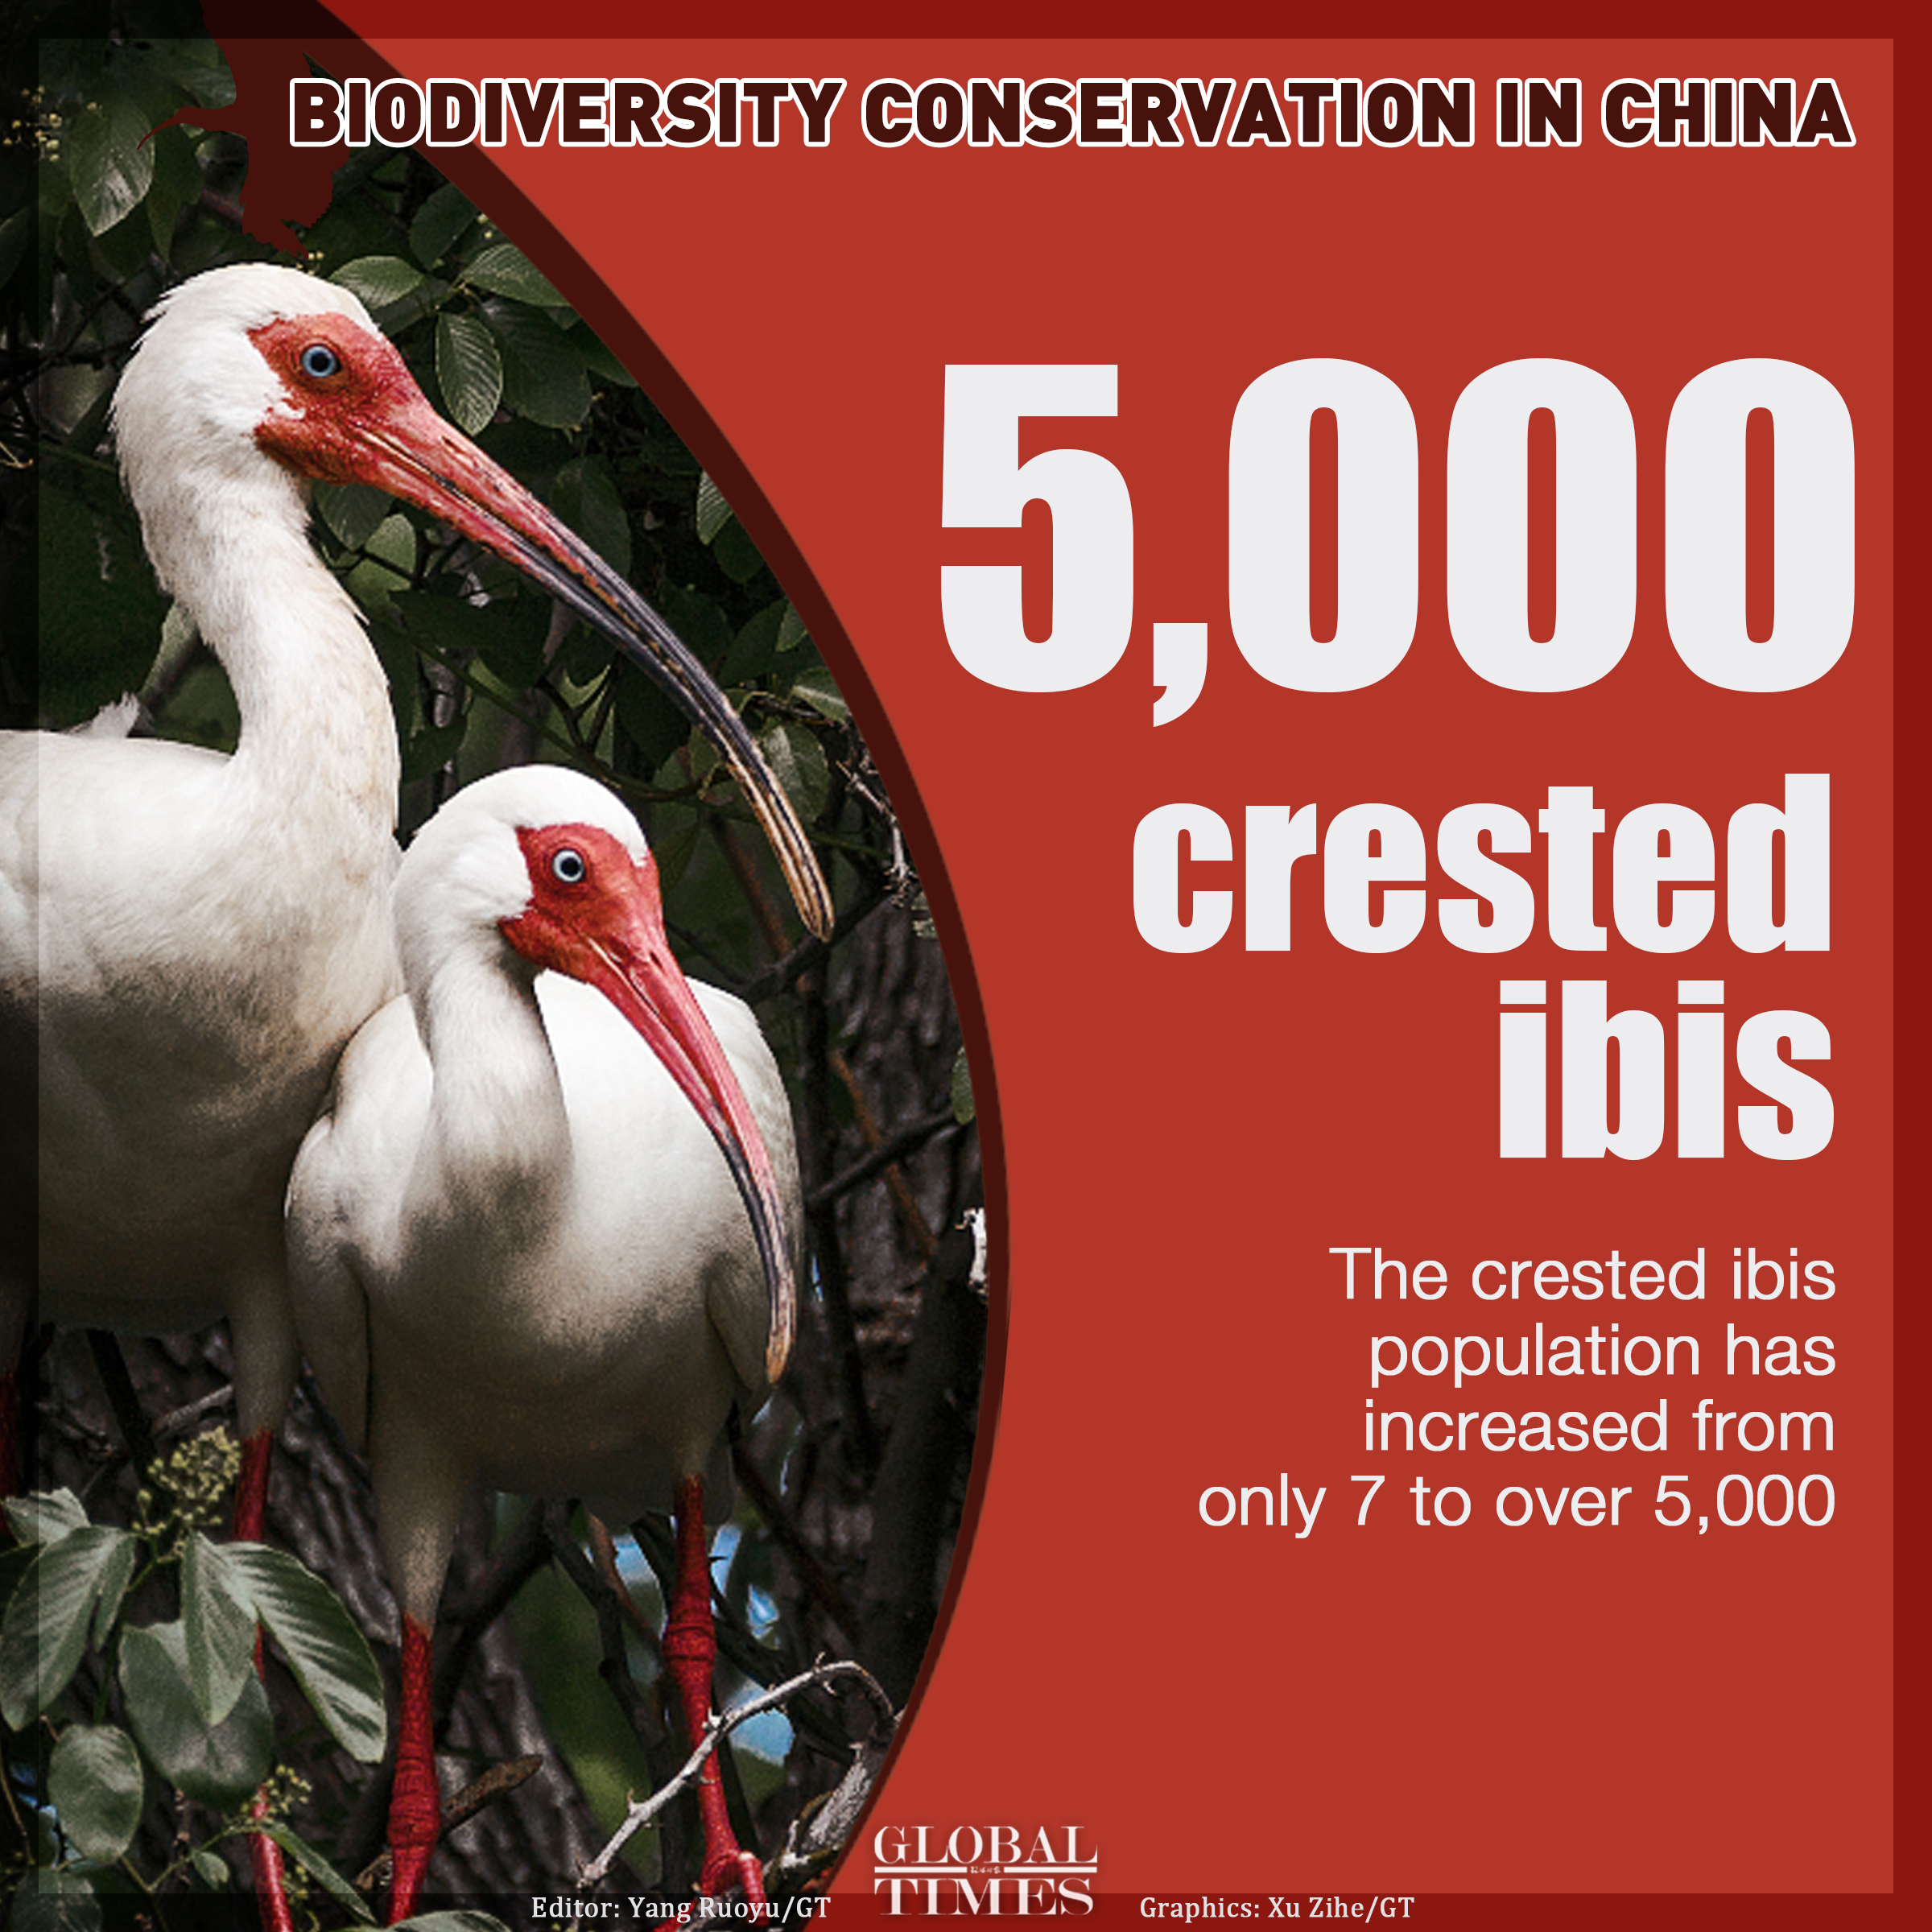 China’s biodiversity conservation efforts Editor: Yang Ruoyu/GT Graphic: Xu Zihe/GT